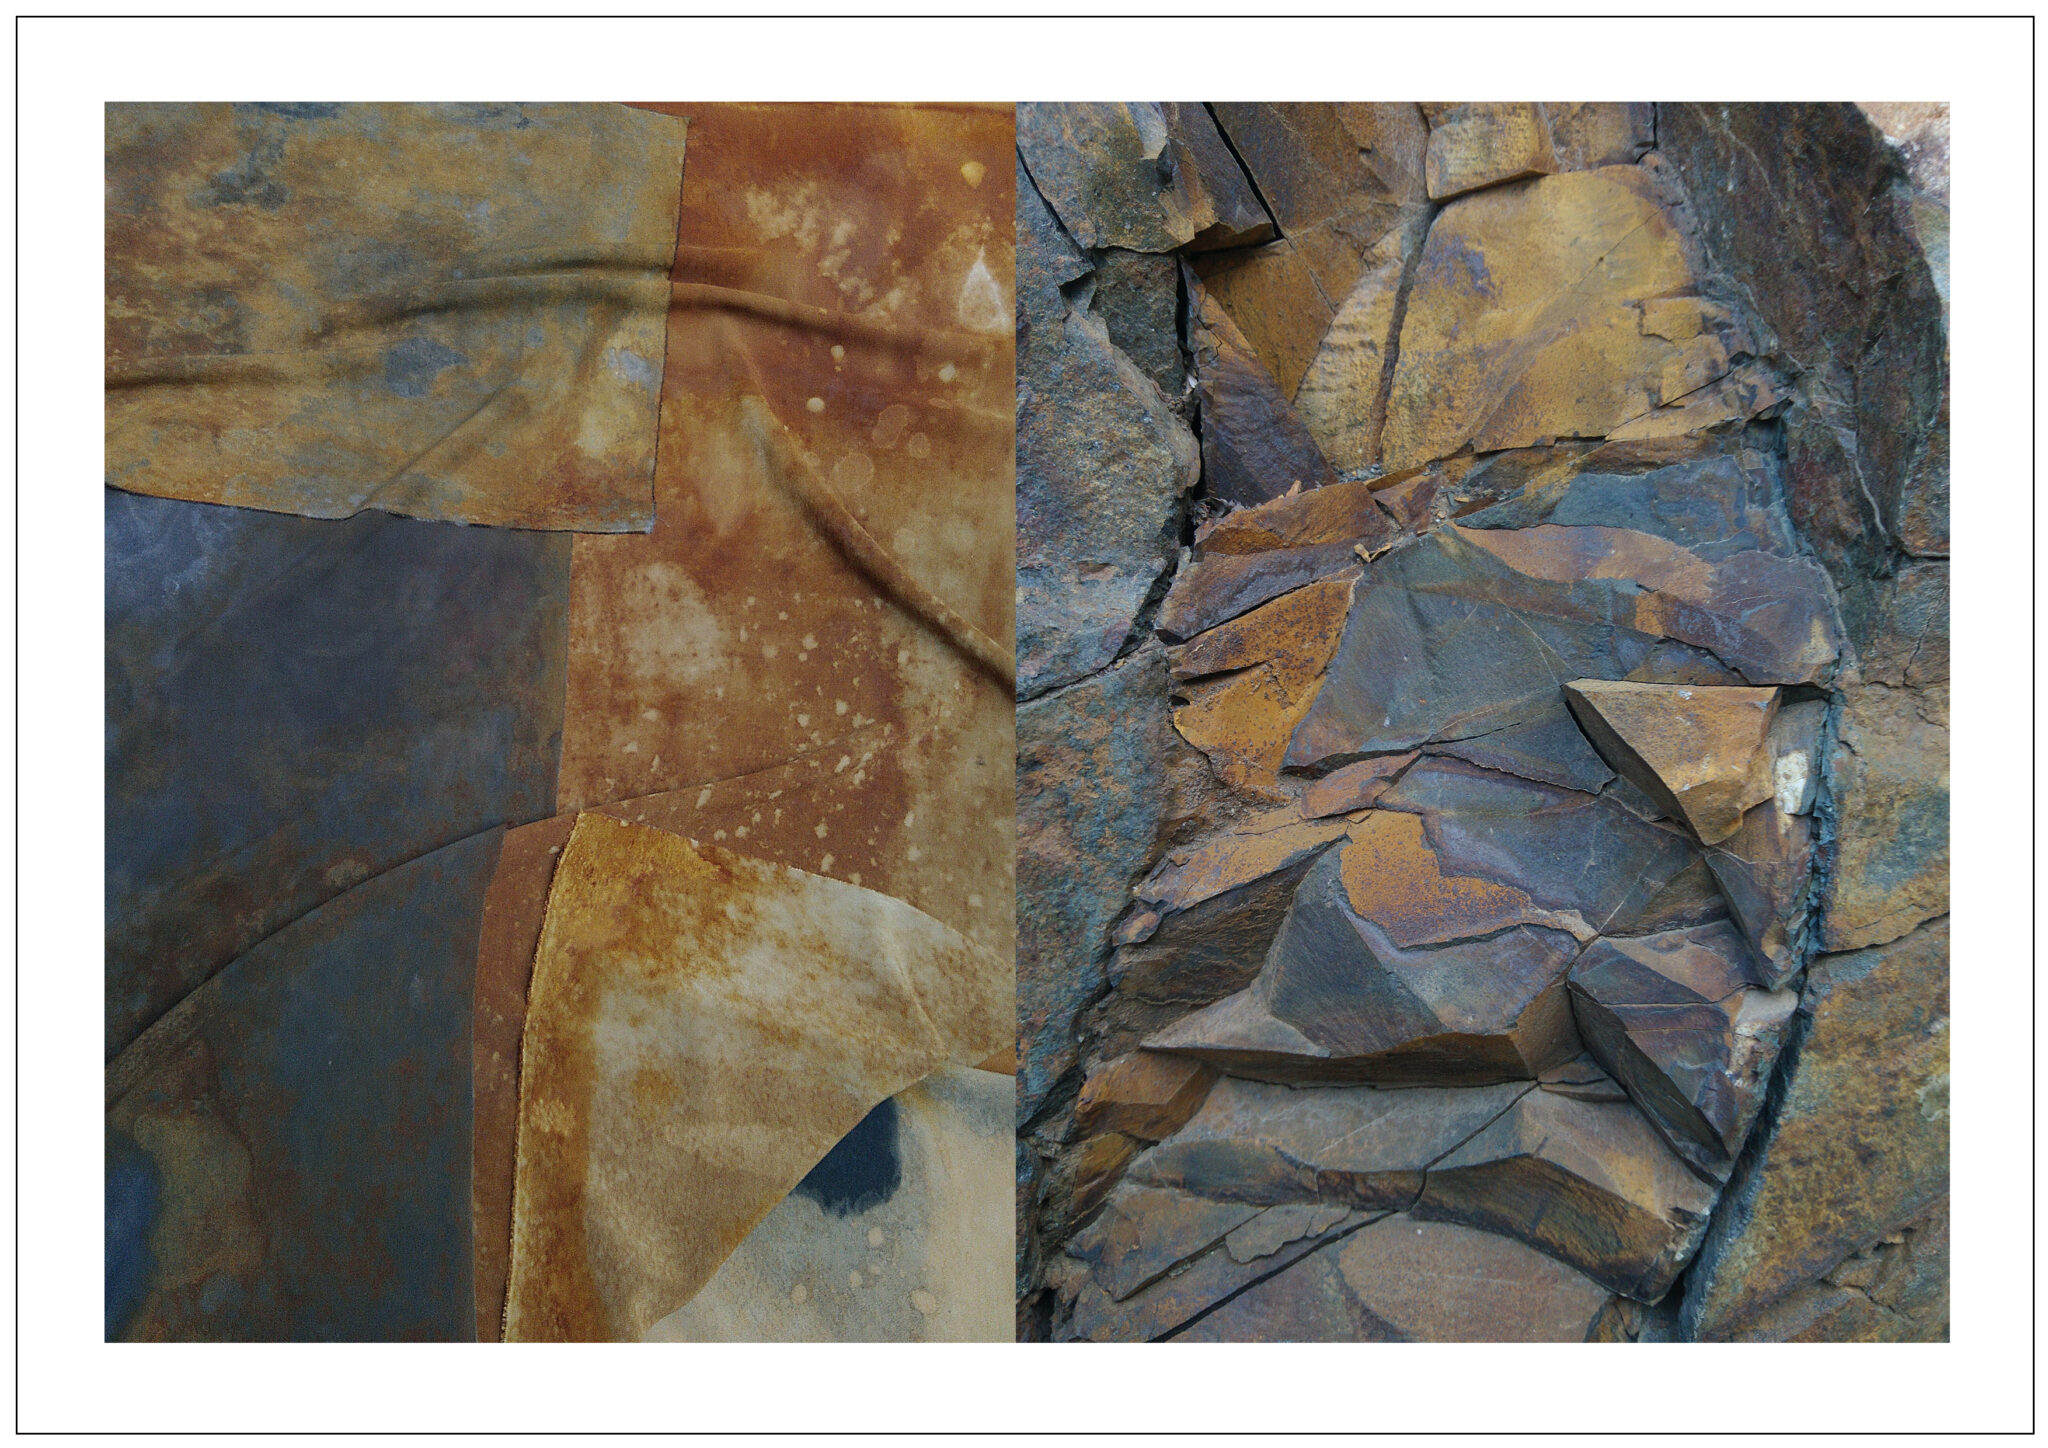 A Textile Geology by Sylvia Eustache Rools